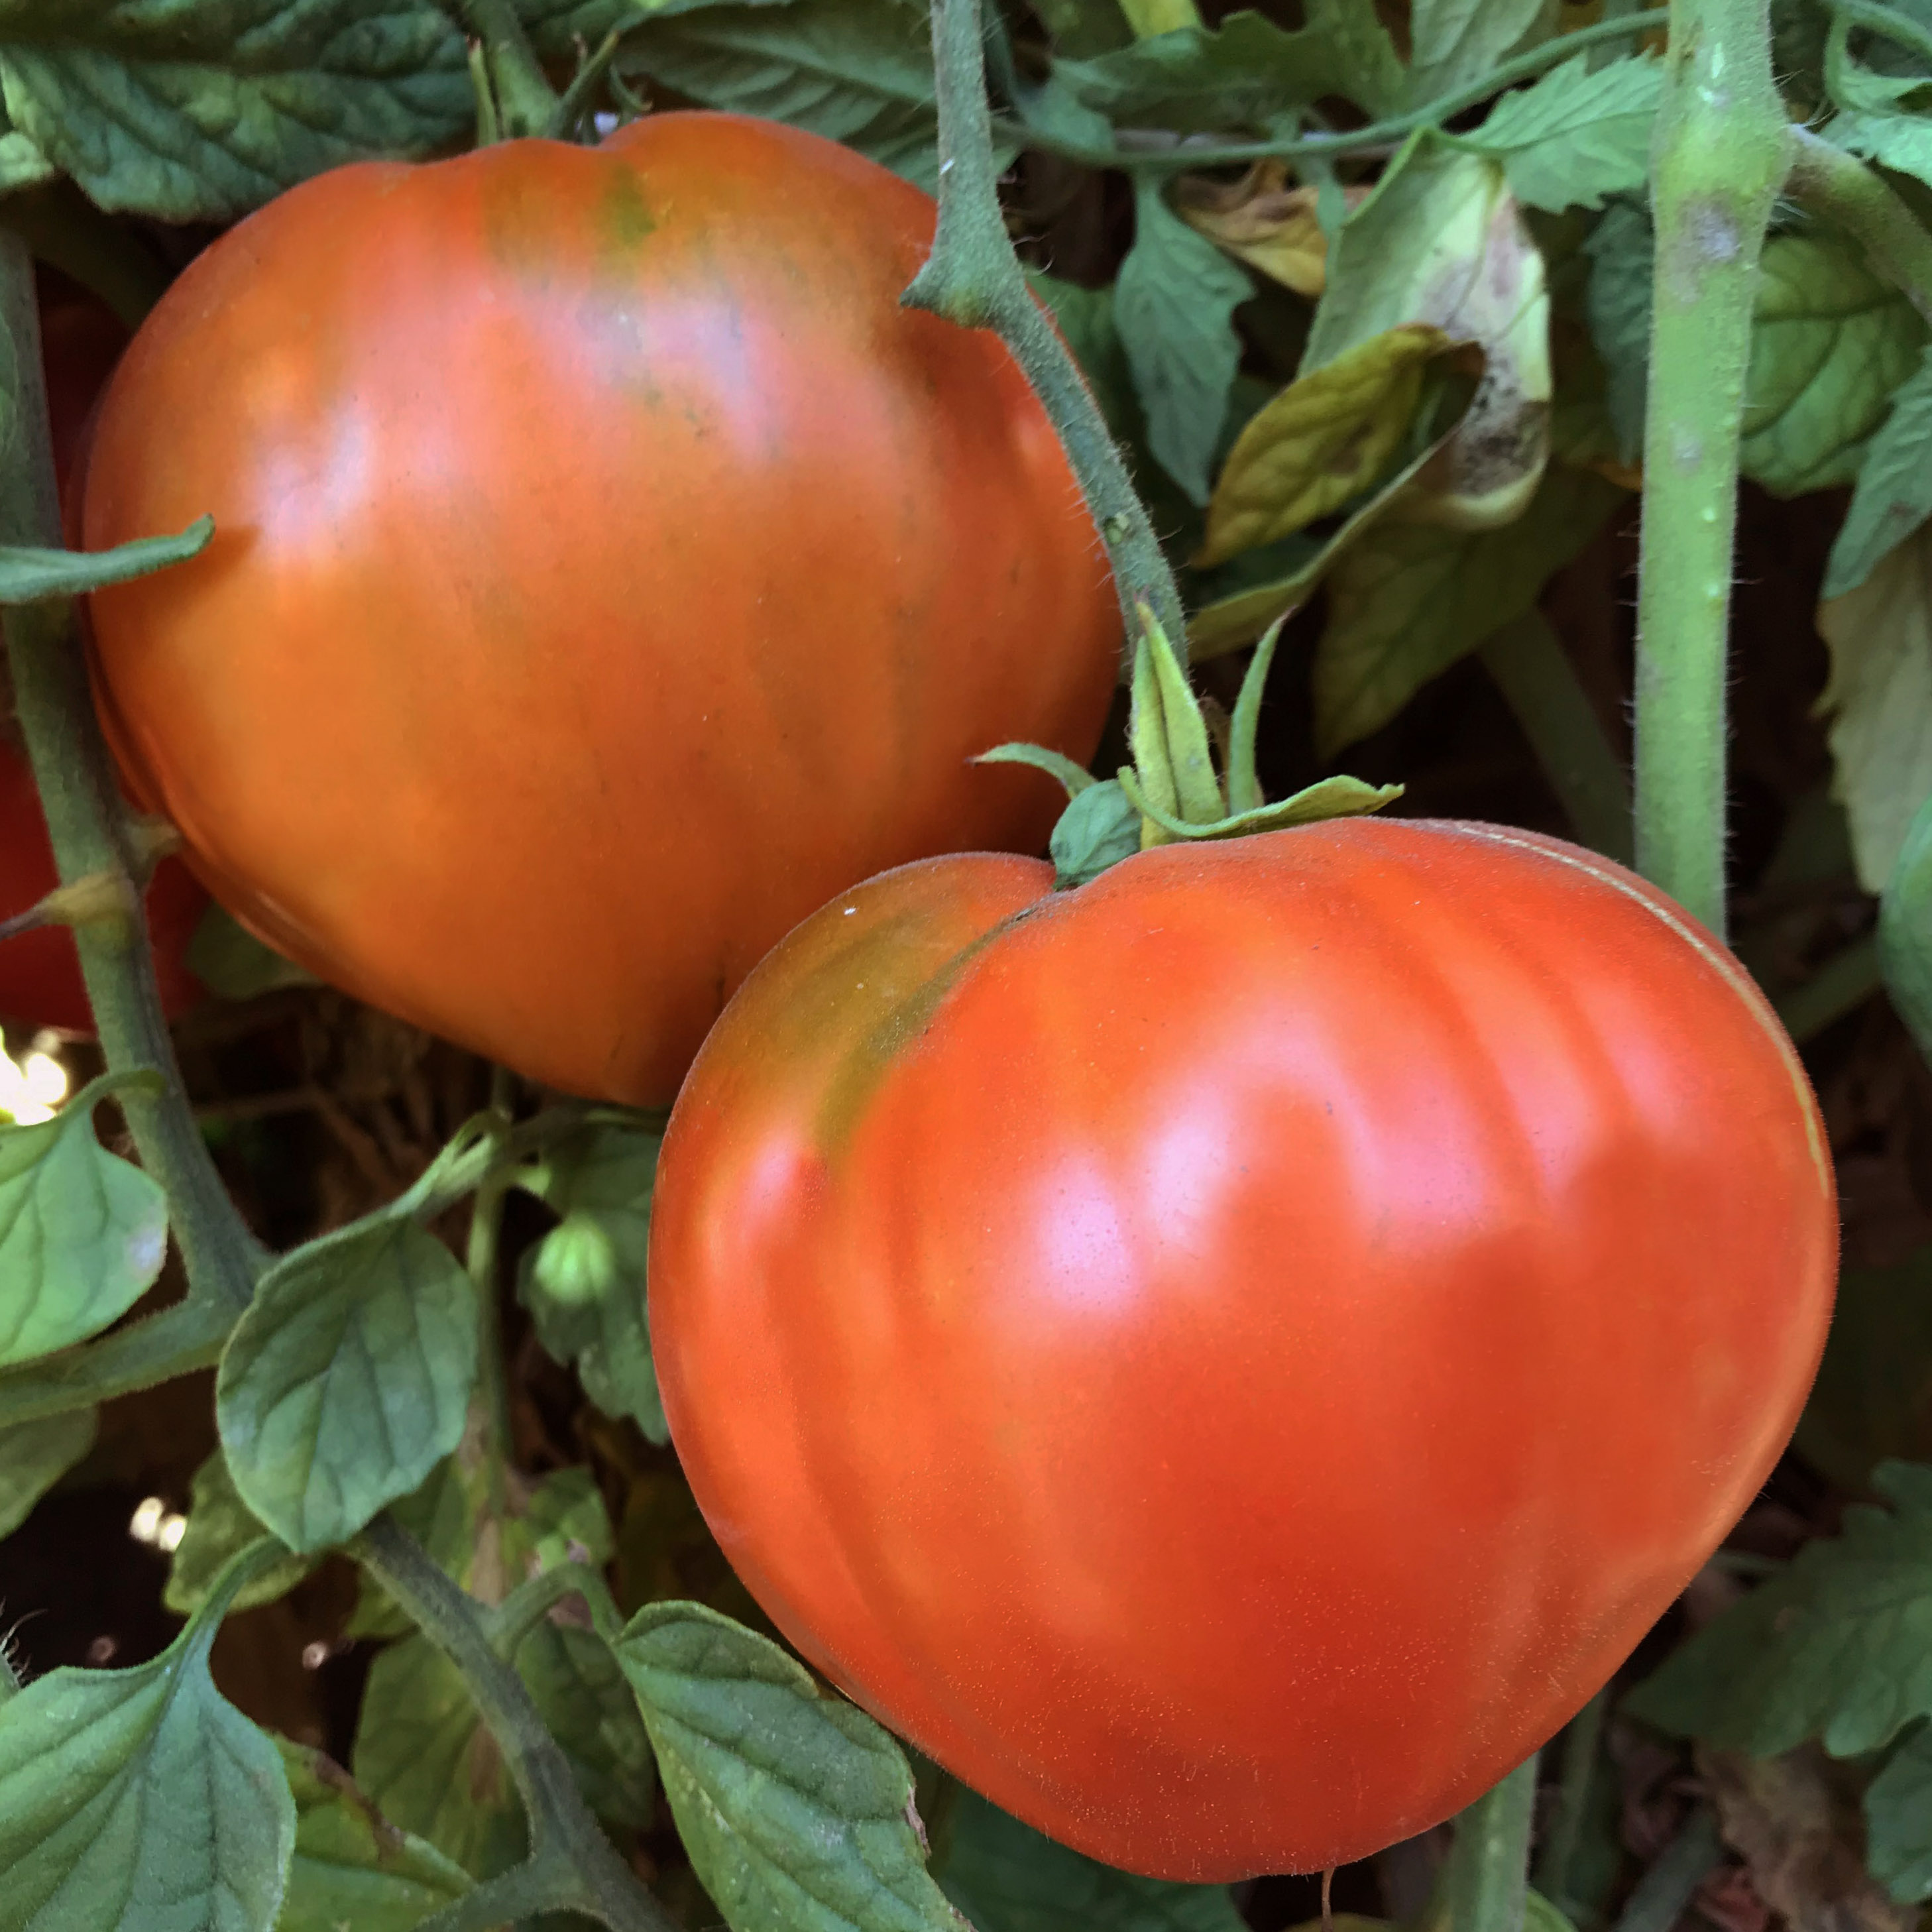 Anthony Bourdain Tomato on the plant